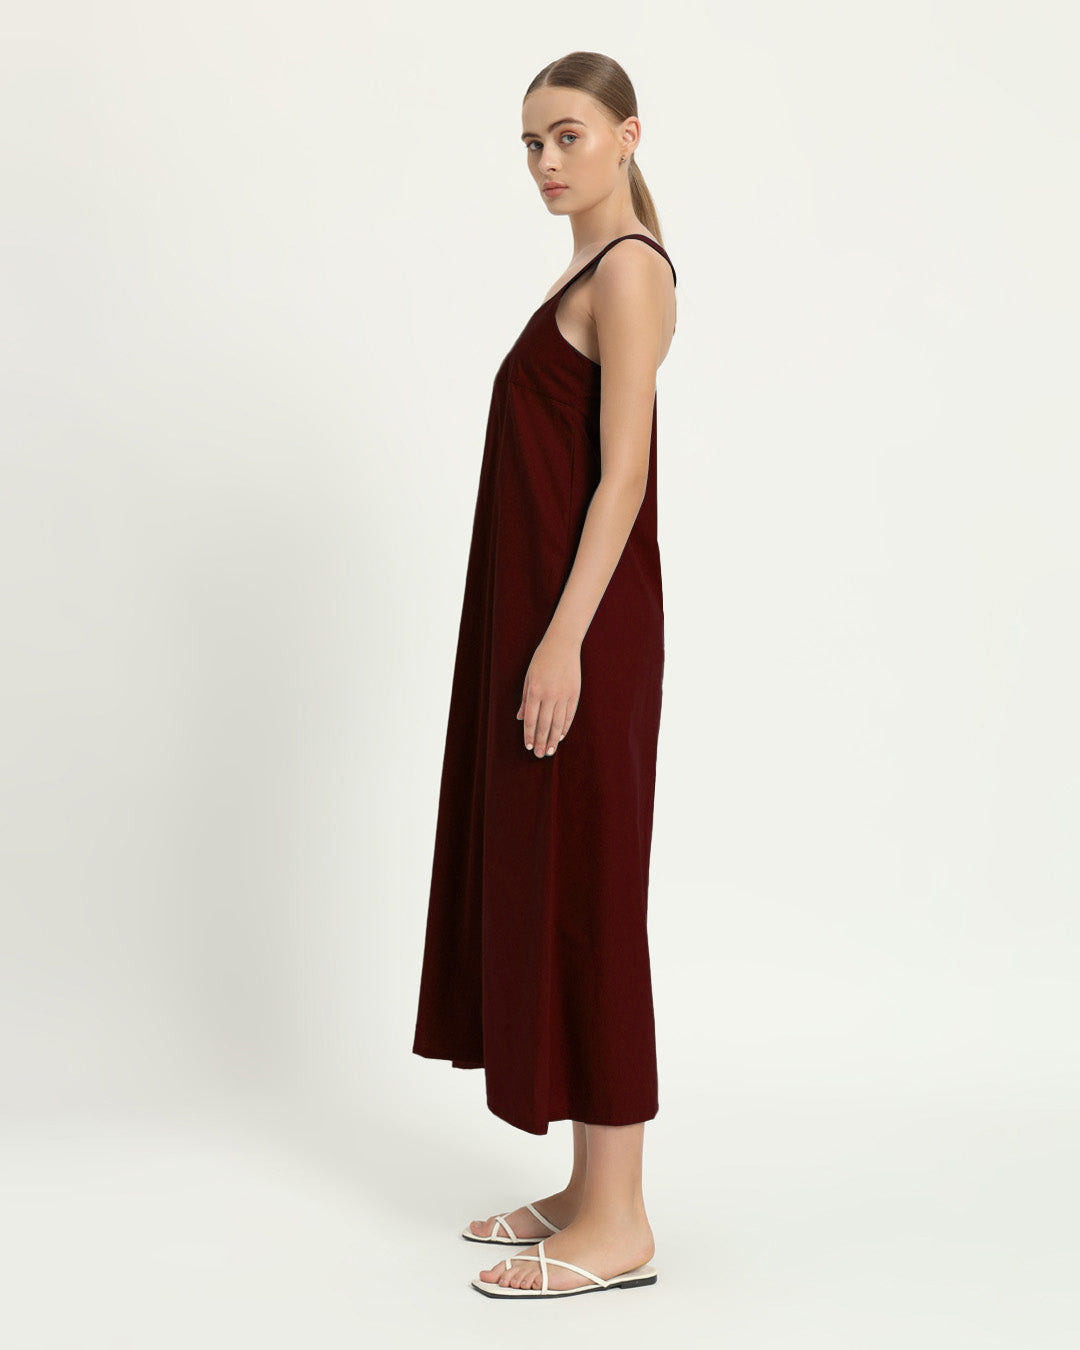 The Magdala Rouge Cotton Dress